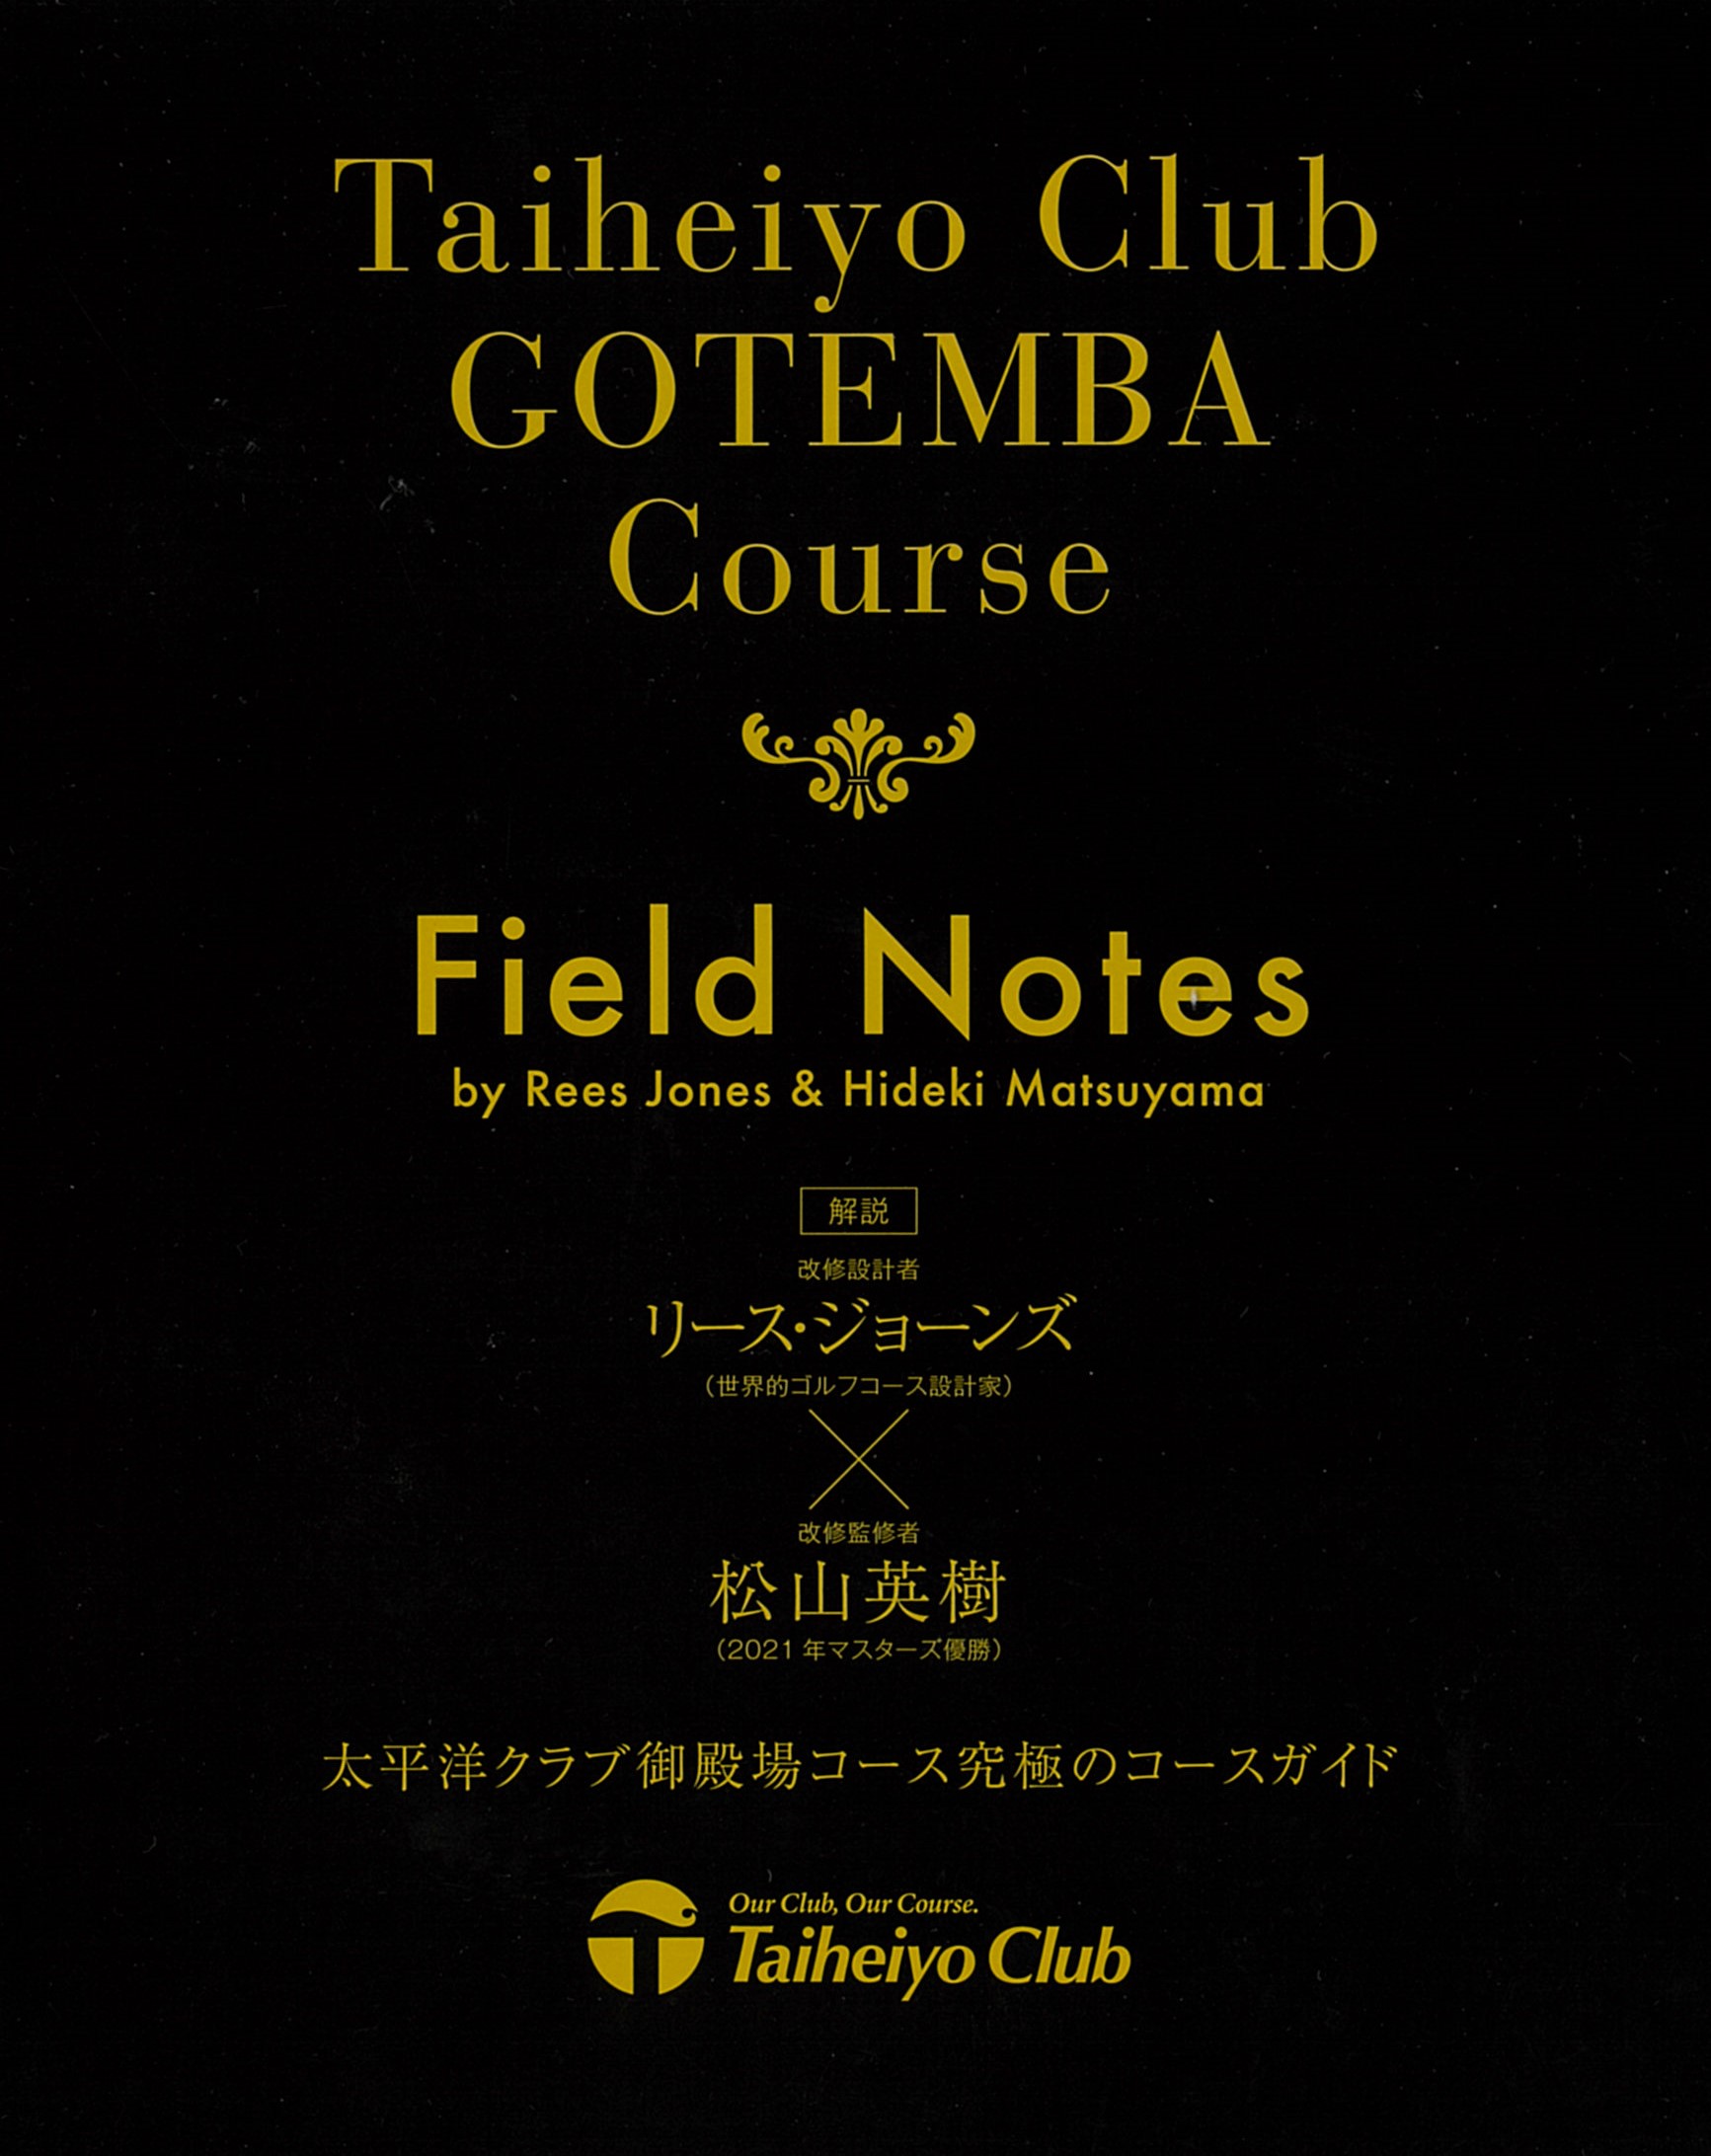 Taiheiyo Club GOTEMBA Course Field Notesの商品画像